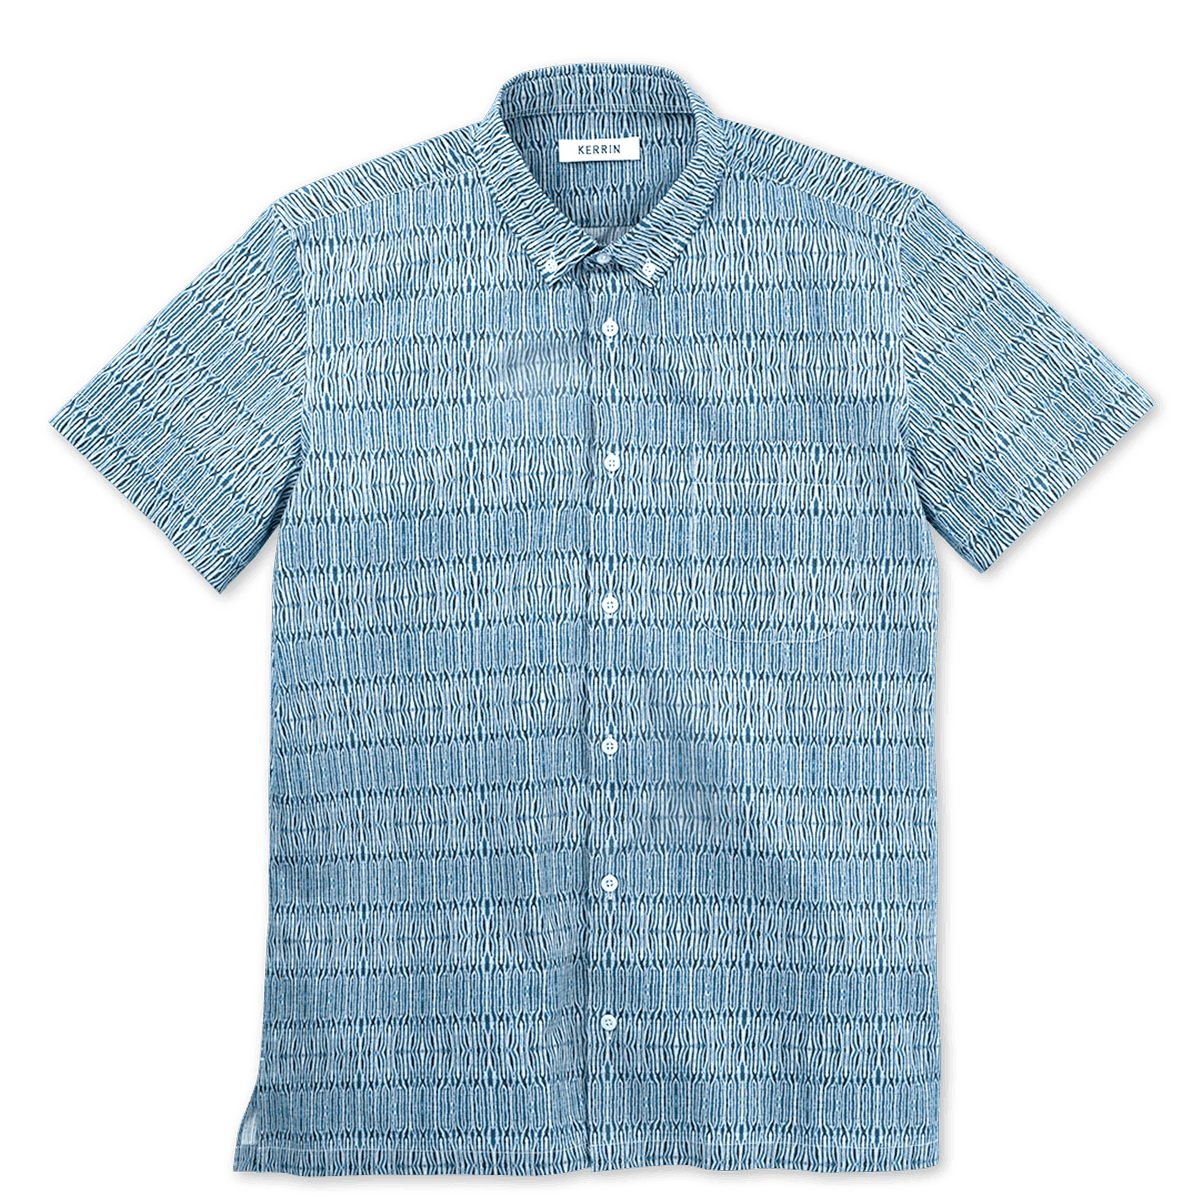 Kerrin Shirt, Mens summer shirt, Mens shirt, Resort Shirt, Print Shirt, Abstract Camo, Ripple Print Shirt, Natural Pattern, Short Sleeve Shirt, Luxury Shirt